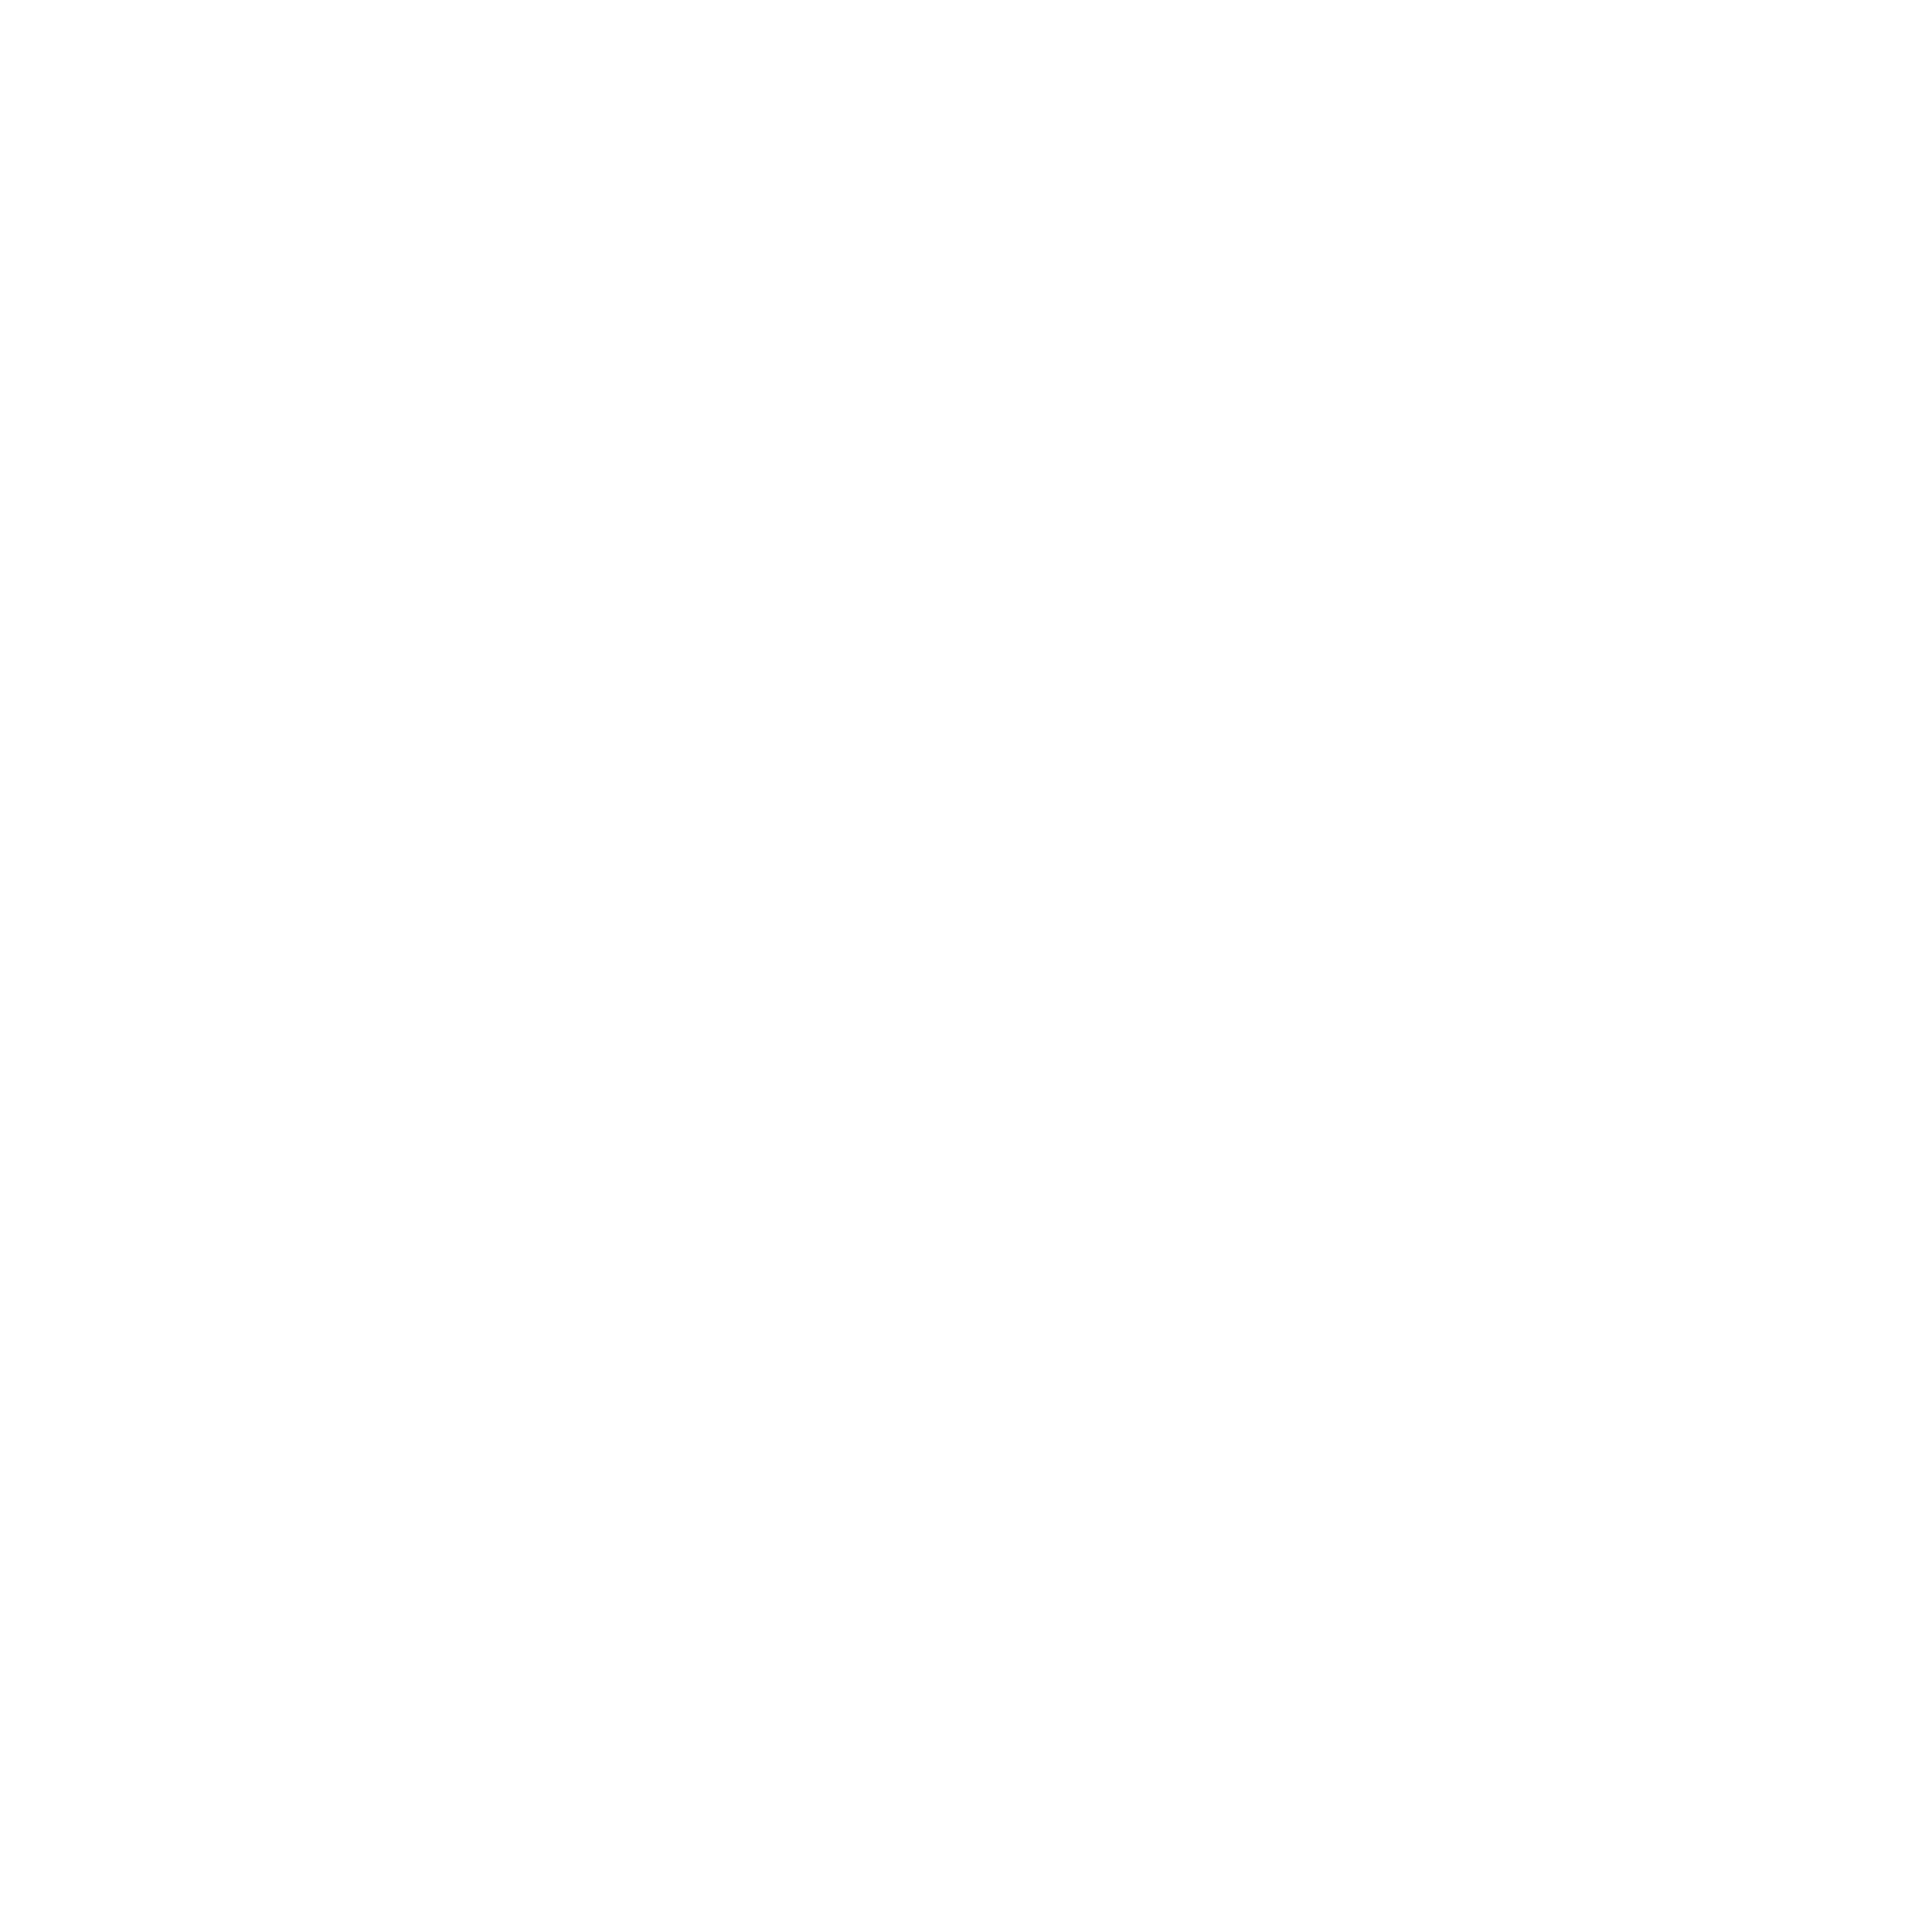 The Motoring Club logo